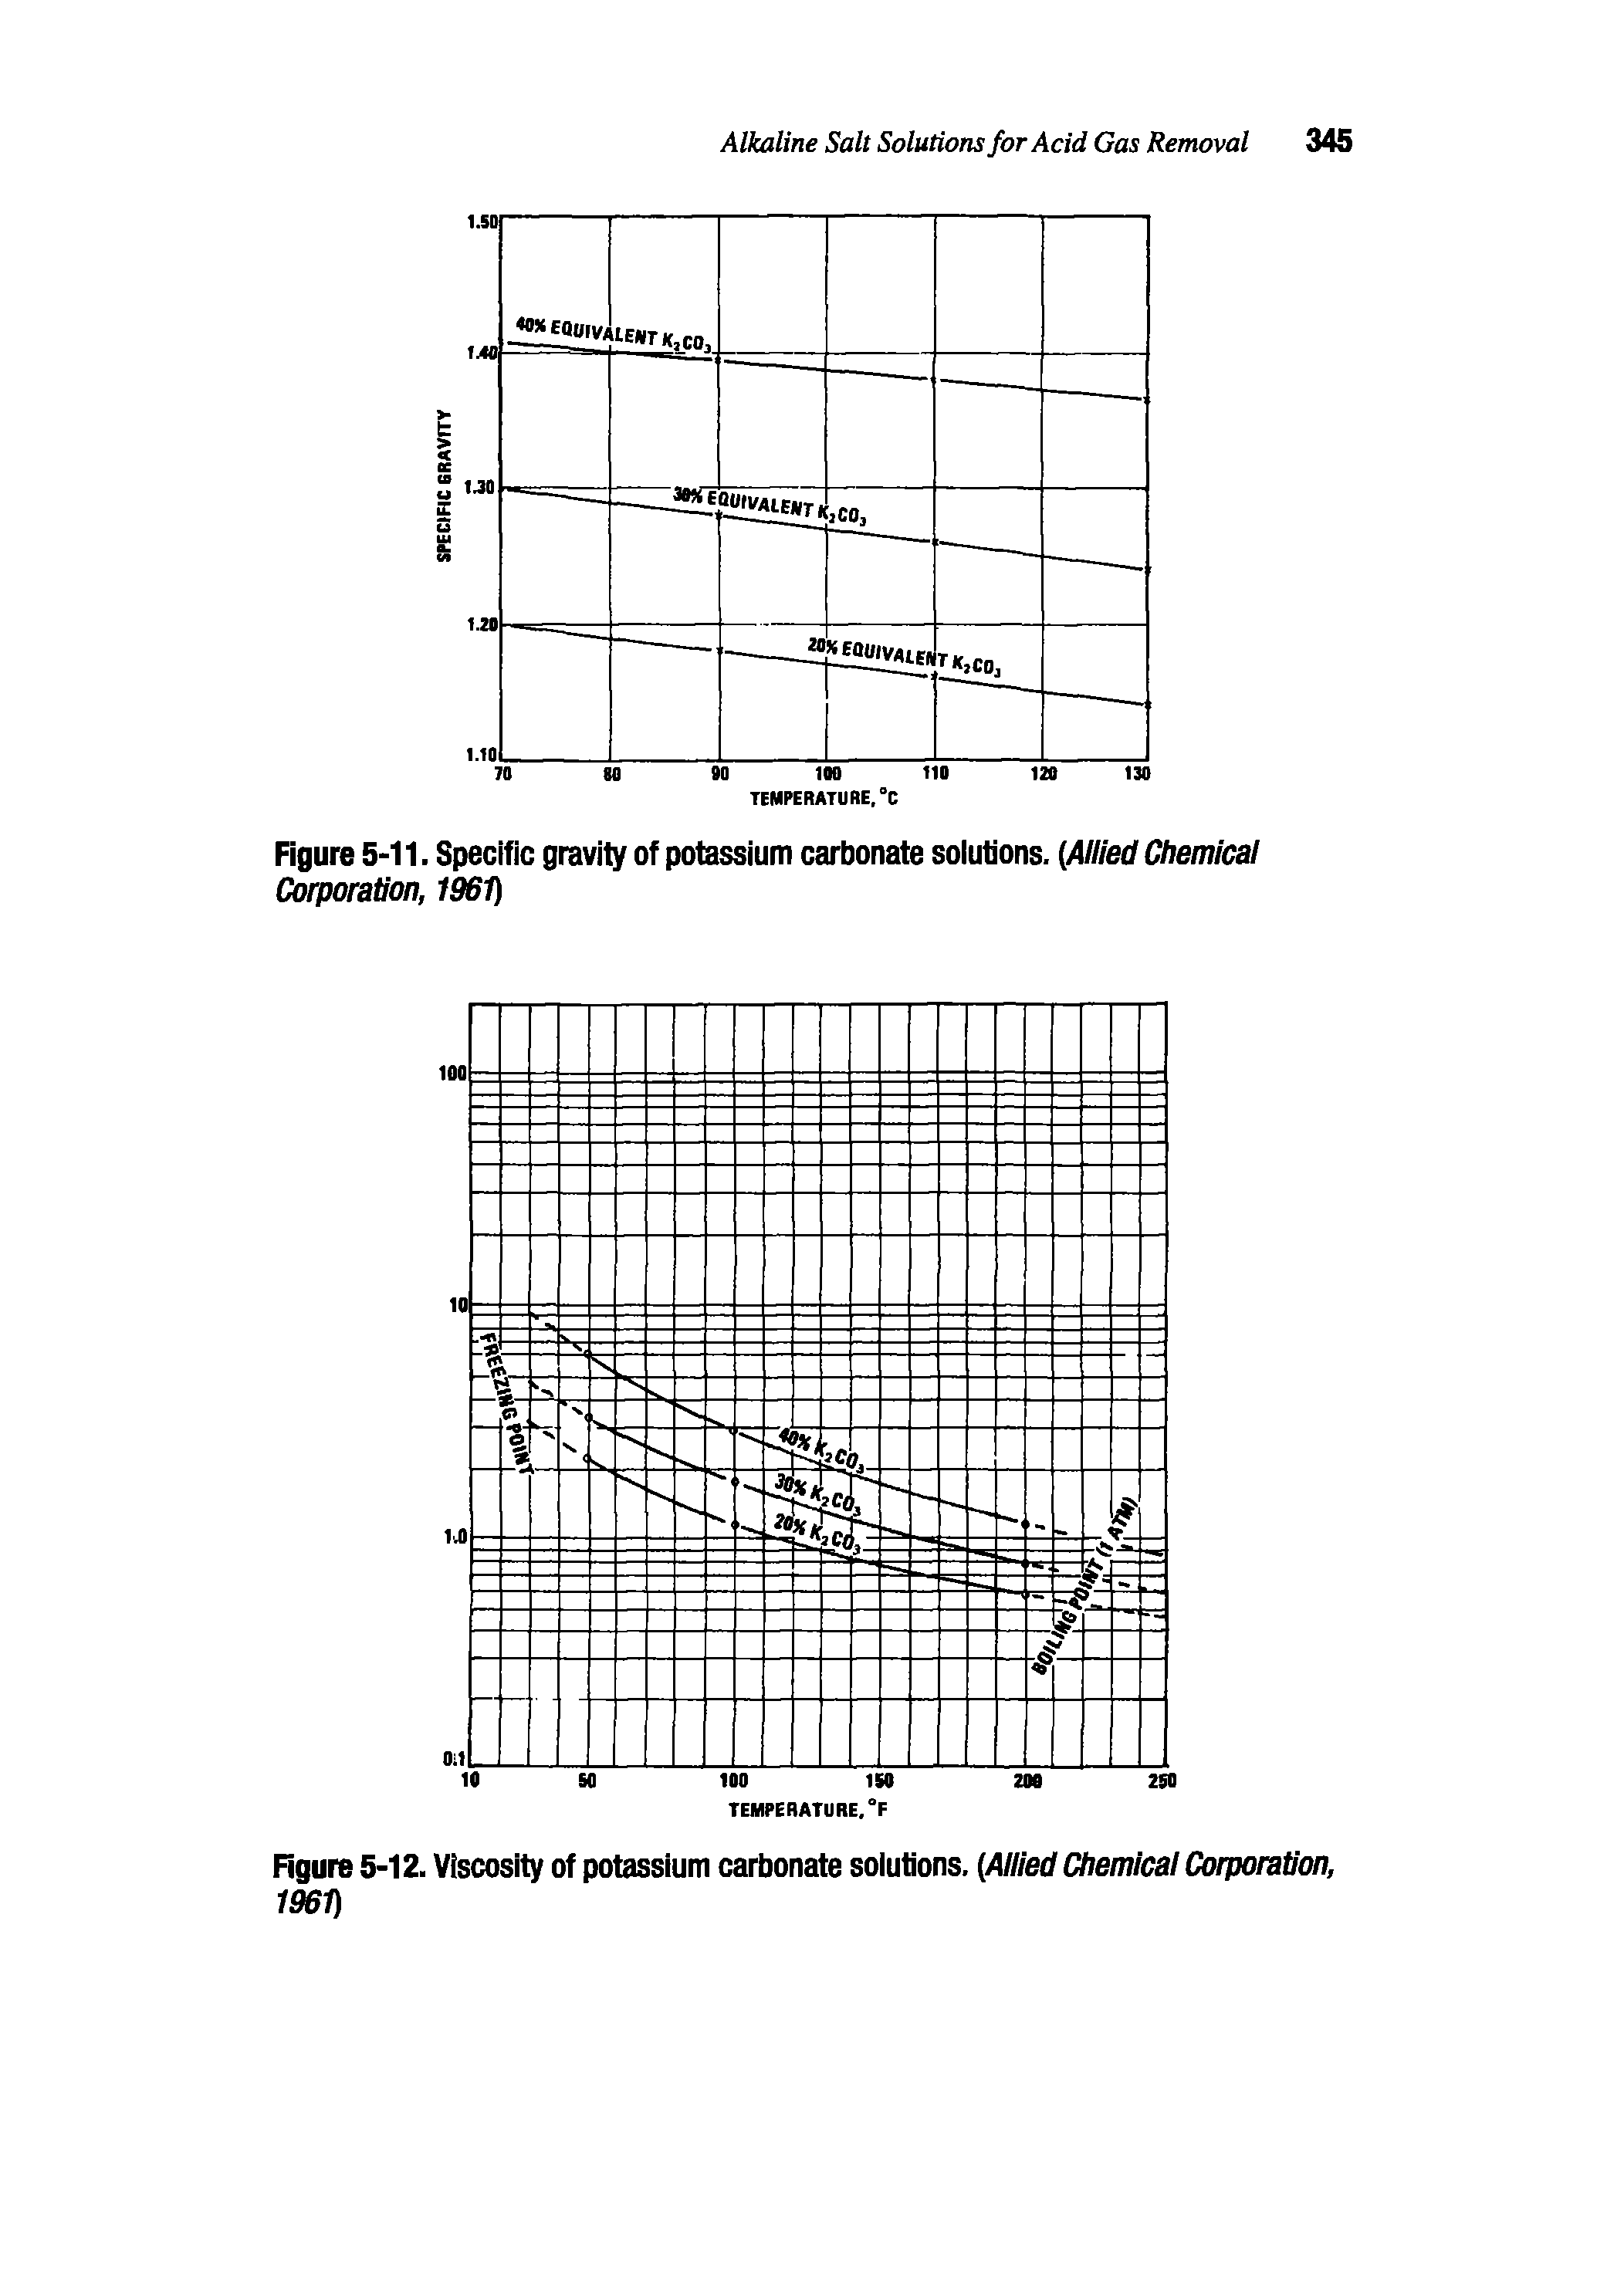 Figure 5-12. Viscosity of potassium carbonate solutions. (Allied Chemical Corporation, 1961)...